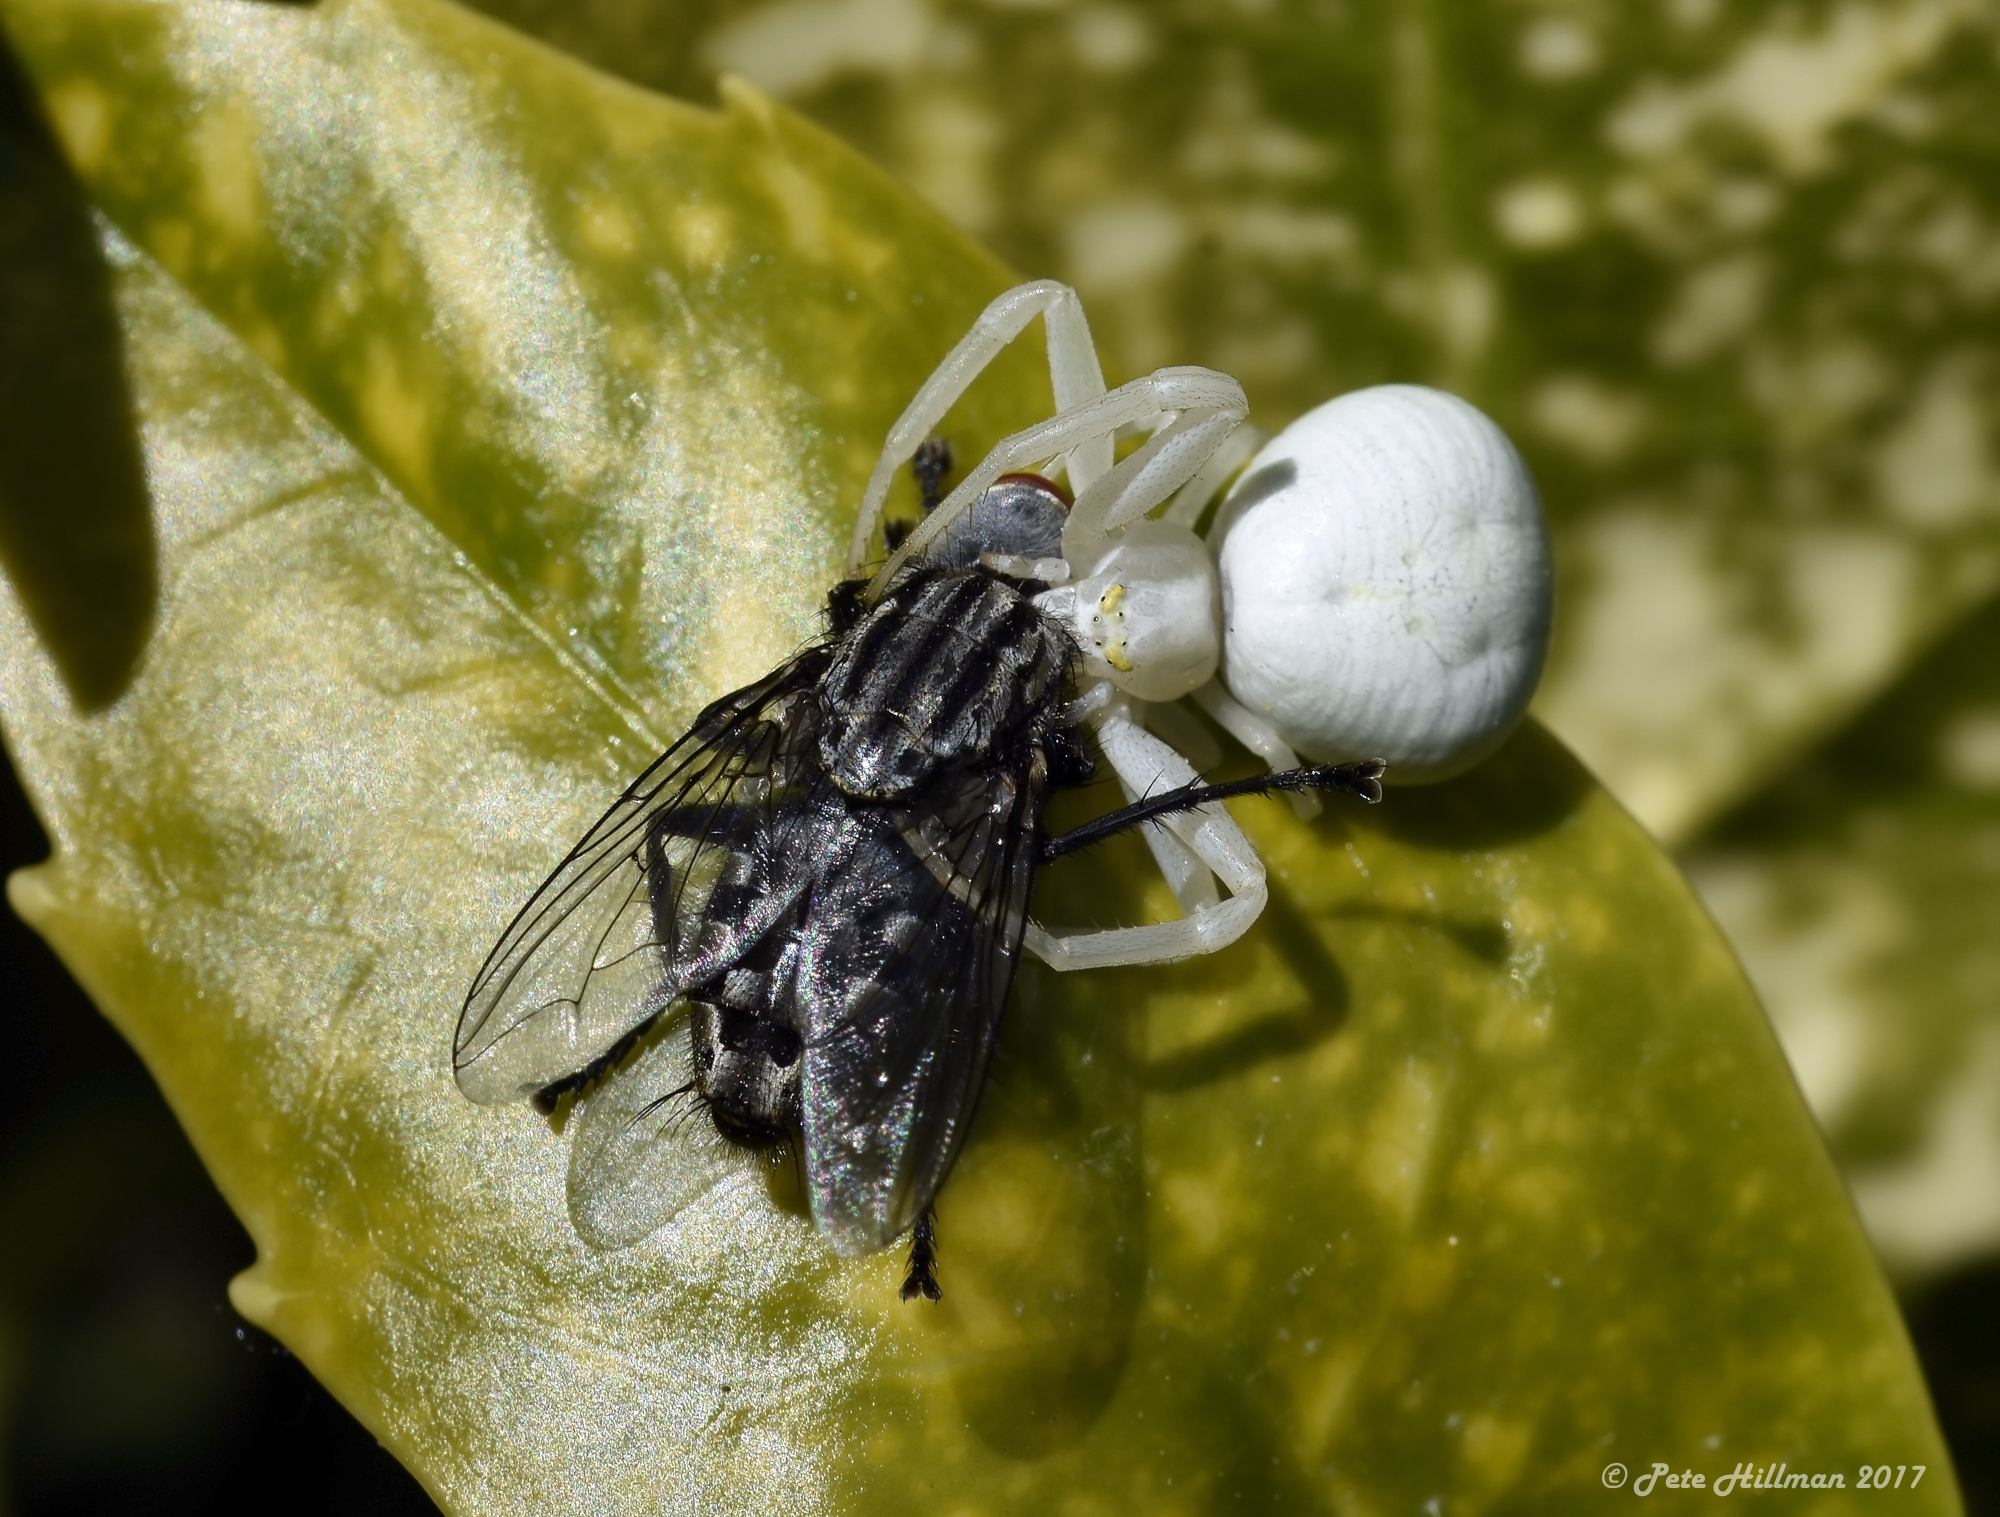 Goldenrod Spider (Misumena vatia) with prey